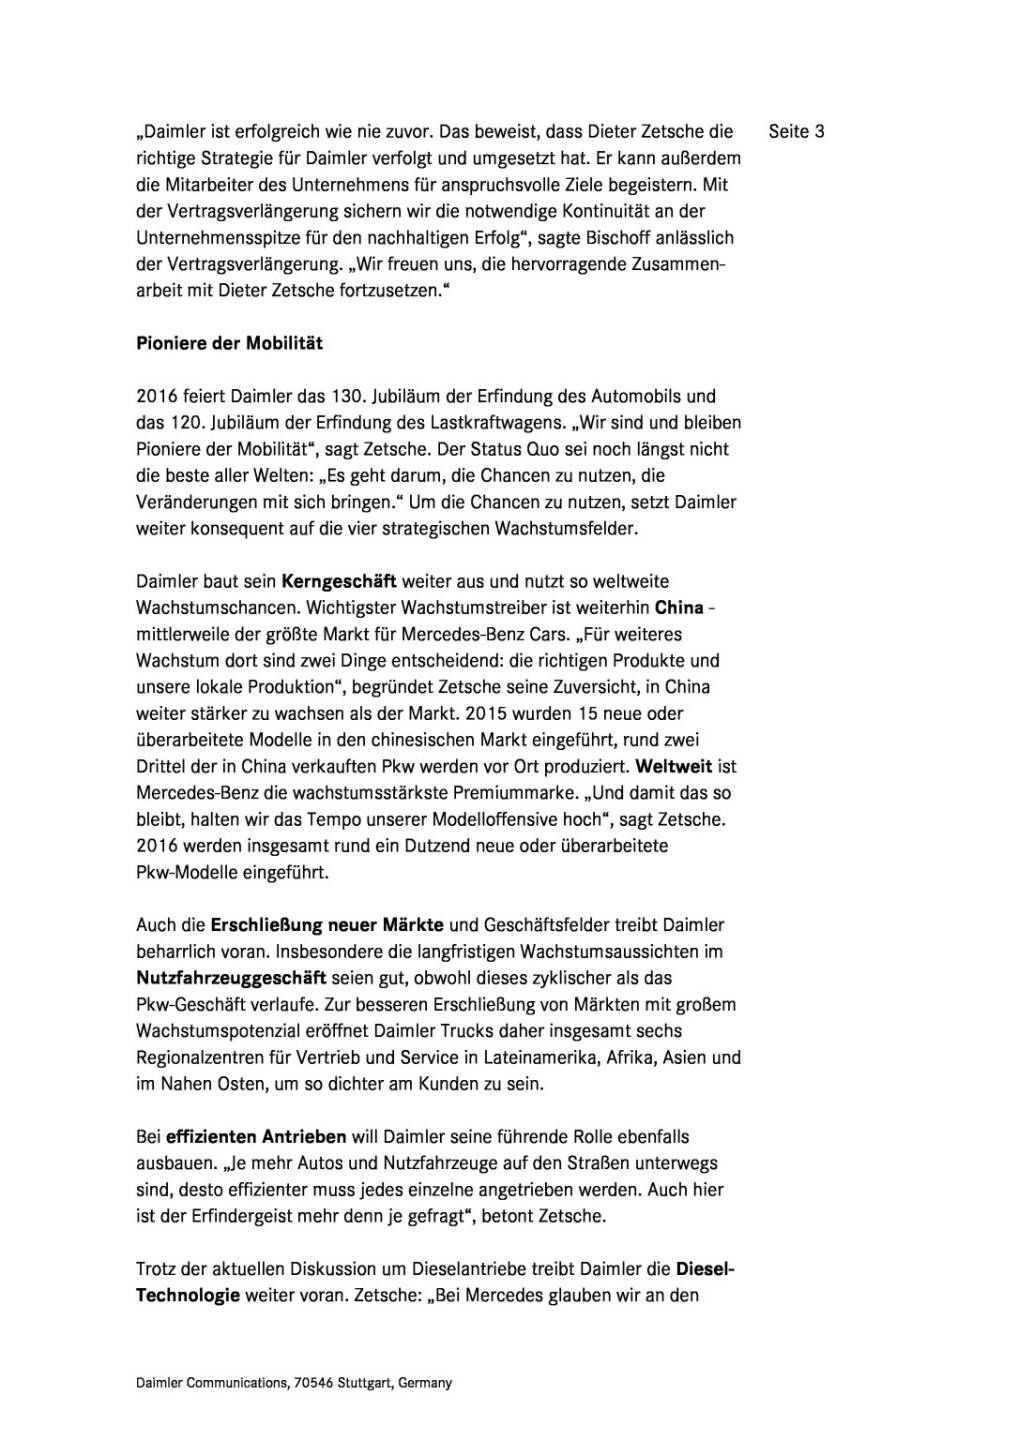 Daimler: Geschäftsjahr 2015, Seite 3/9, komplettes Dokument unter http://boerse-social.com/static/uploads/file_851_daimler_geschaftsjahr_2015.pdf